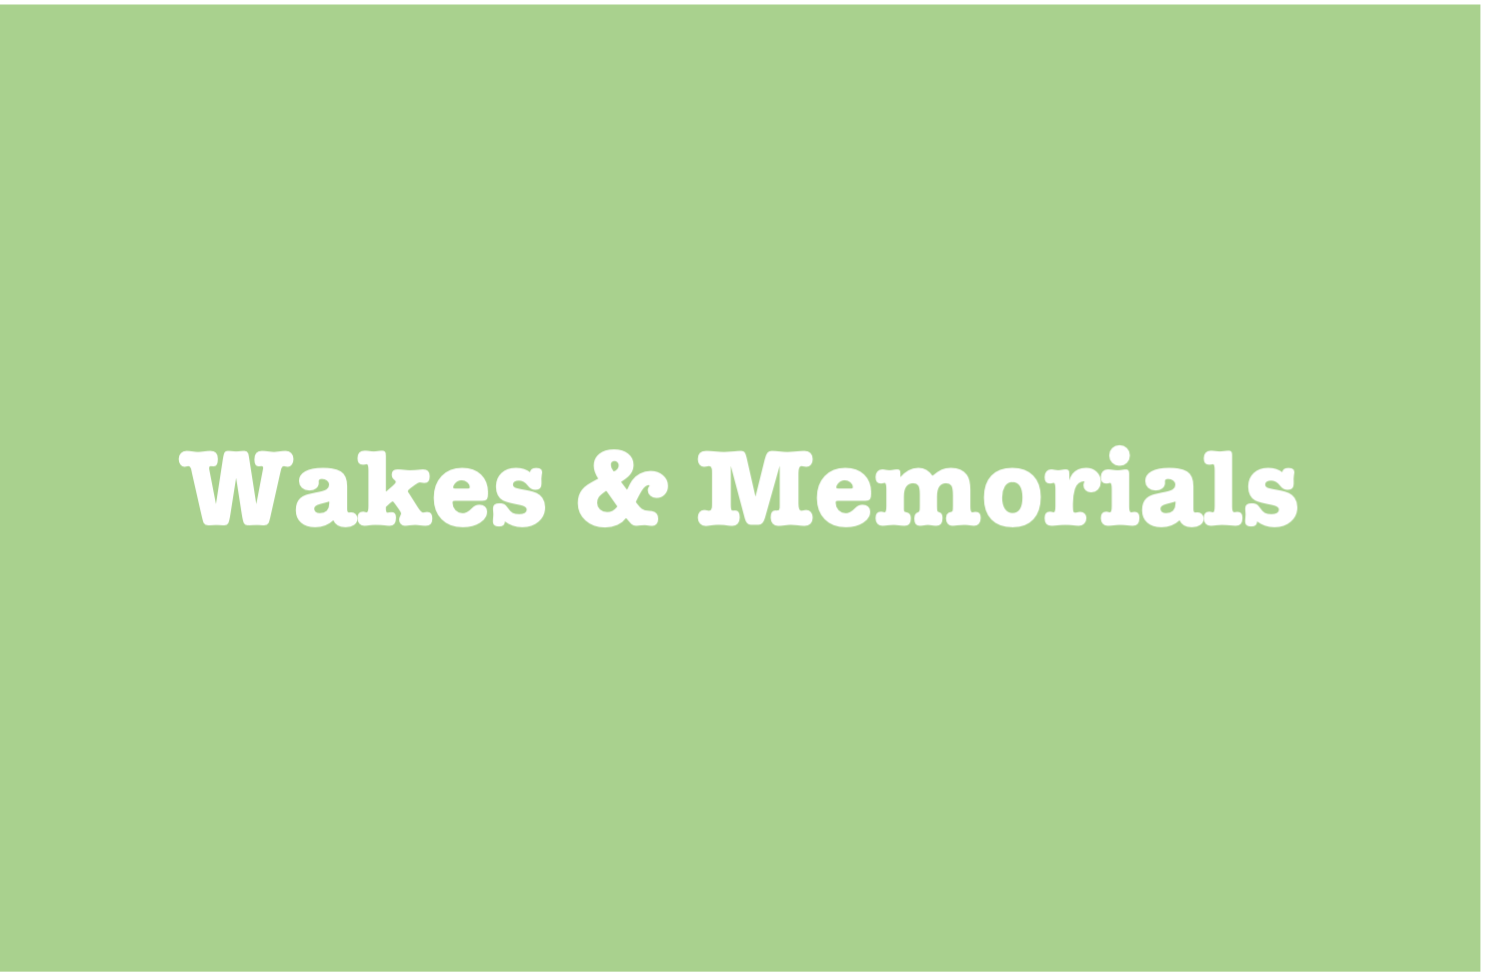 Wakes & Memorials - Central Coast Caterer